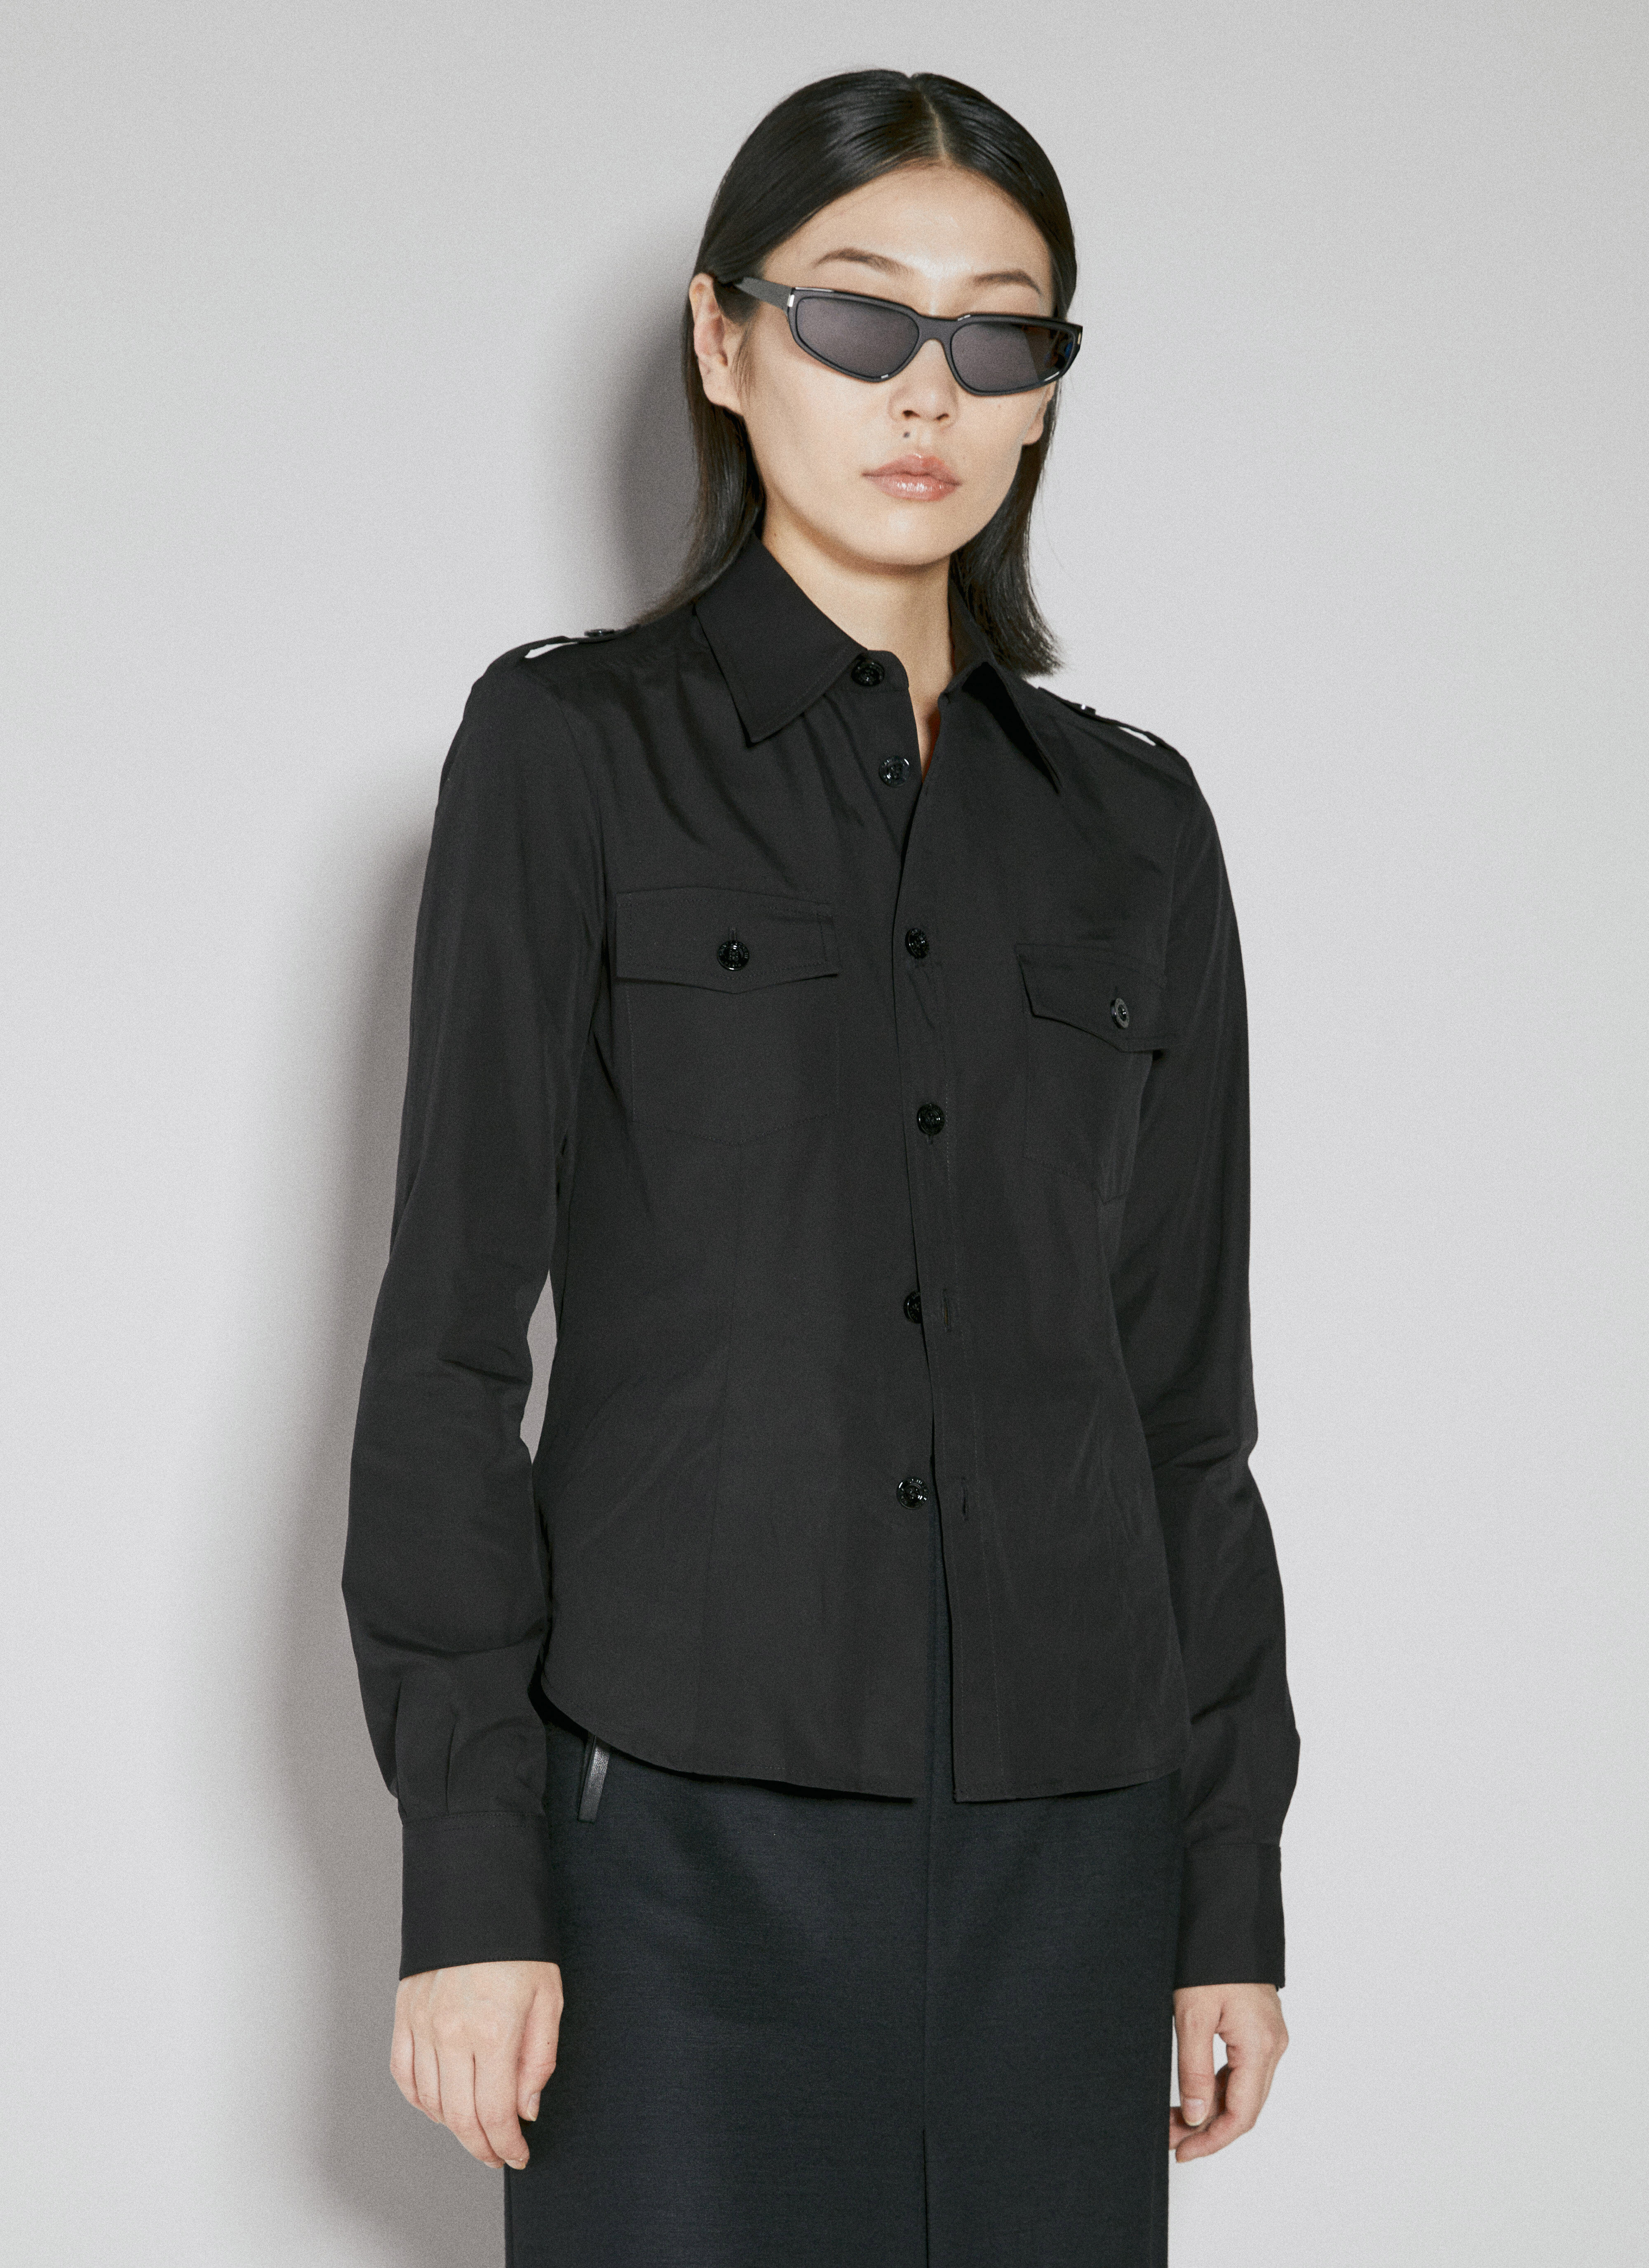 Saint Laurent SL 634 Nova Sunglasses in Black | LN-CC®